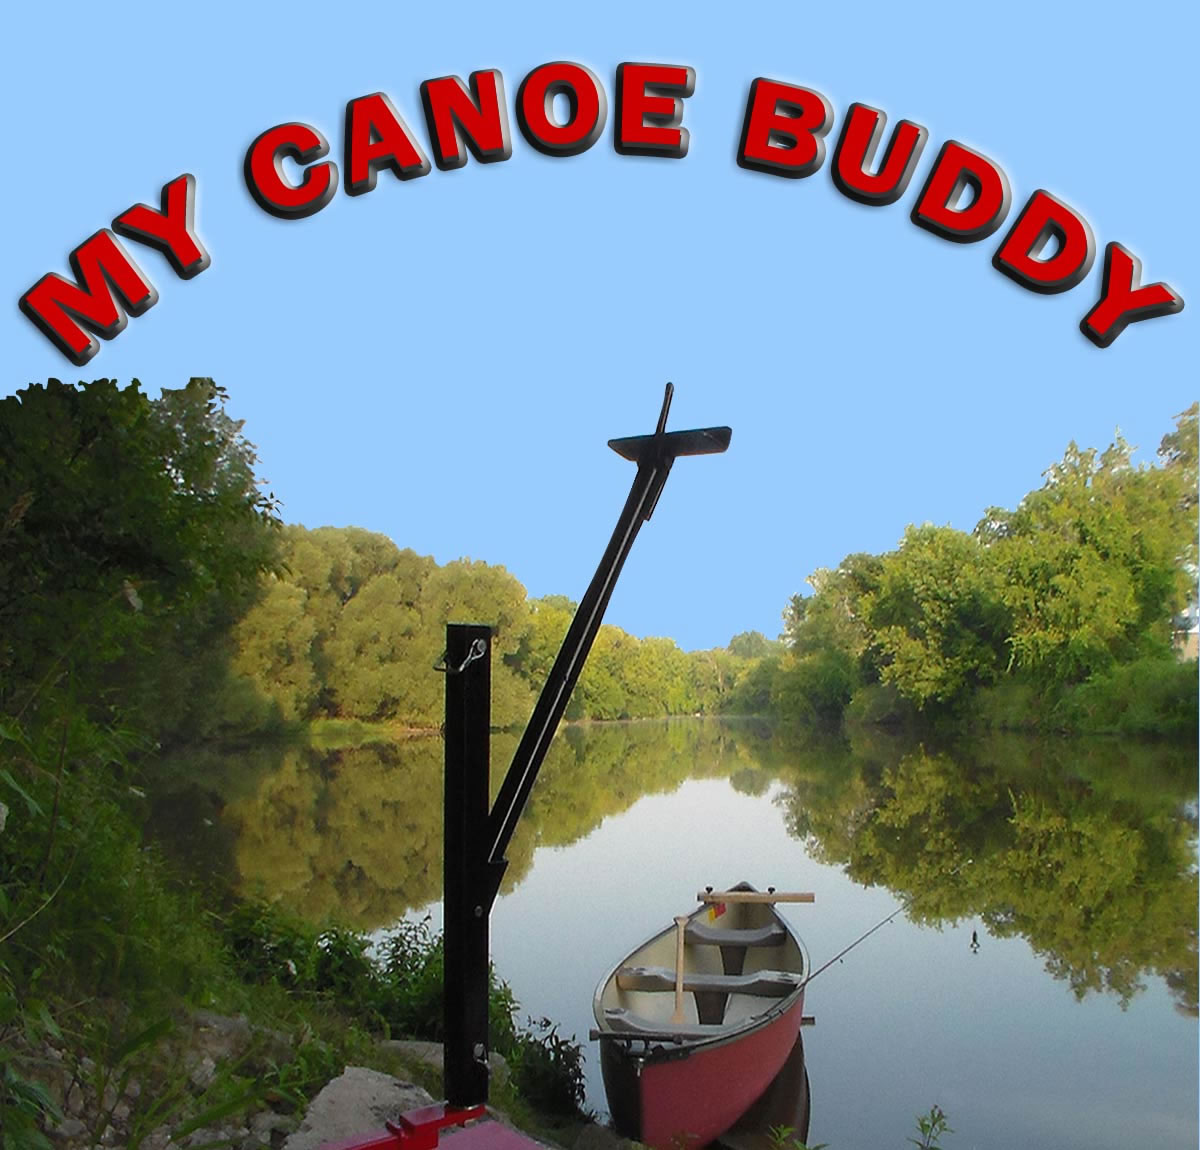 My Canoe Buddy